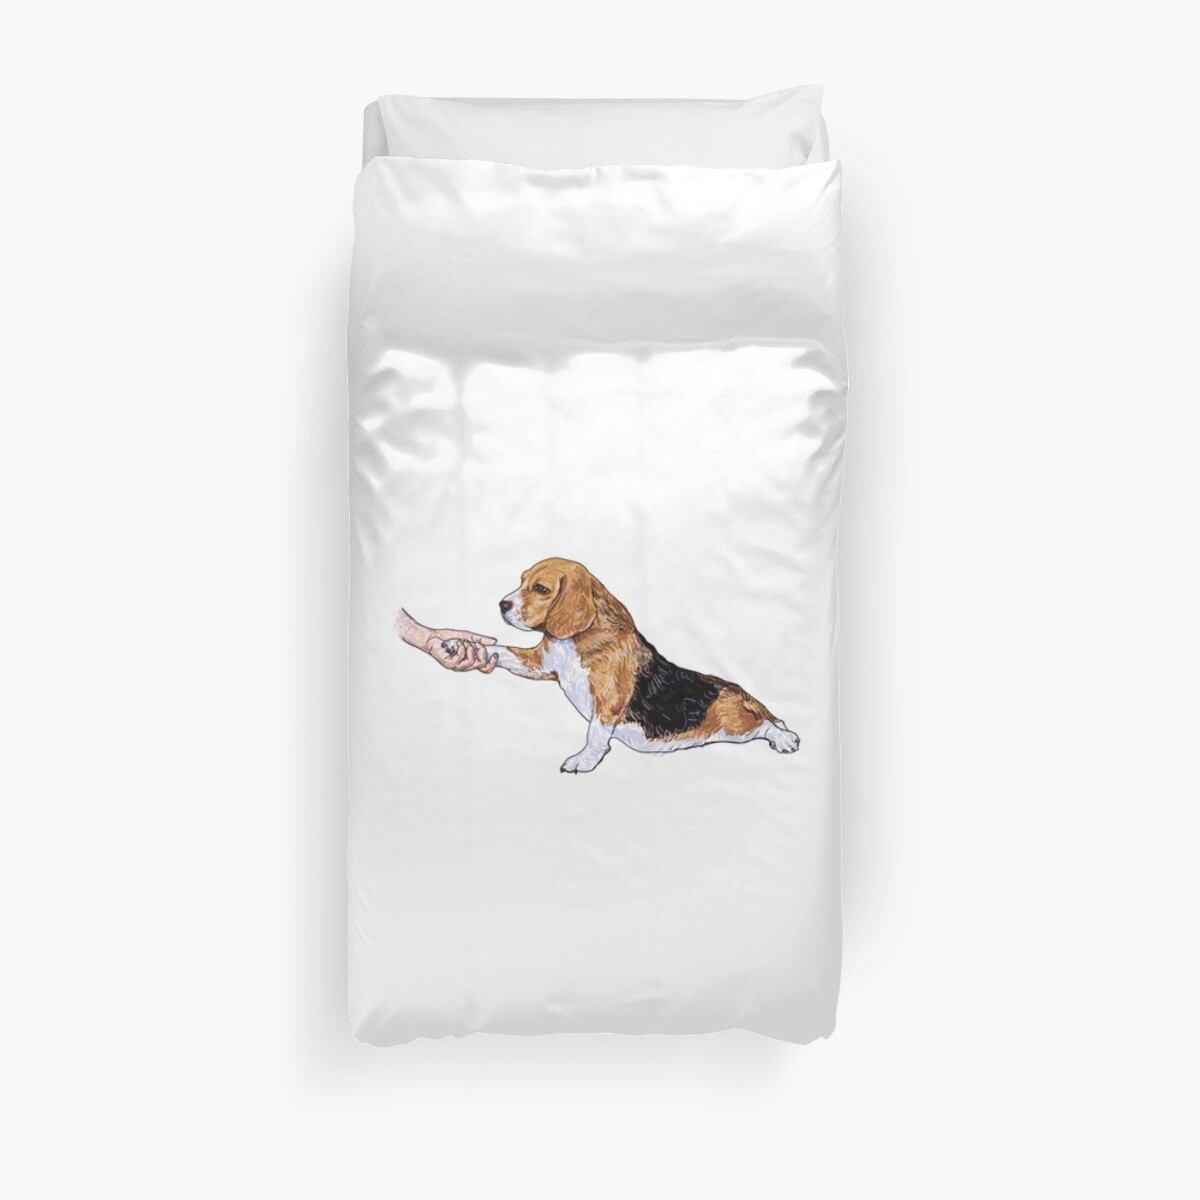 ... hand holding beagle's leg" Duvet Covers by hadkhanong | Redbubble